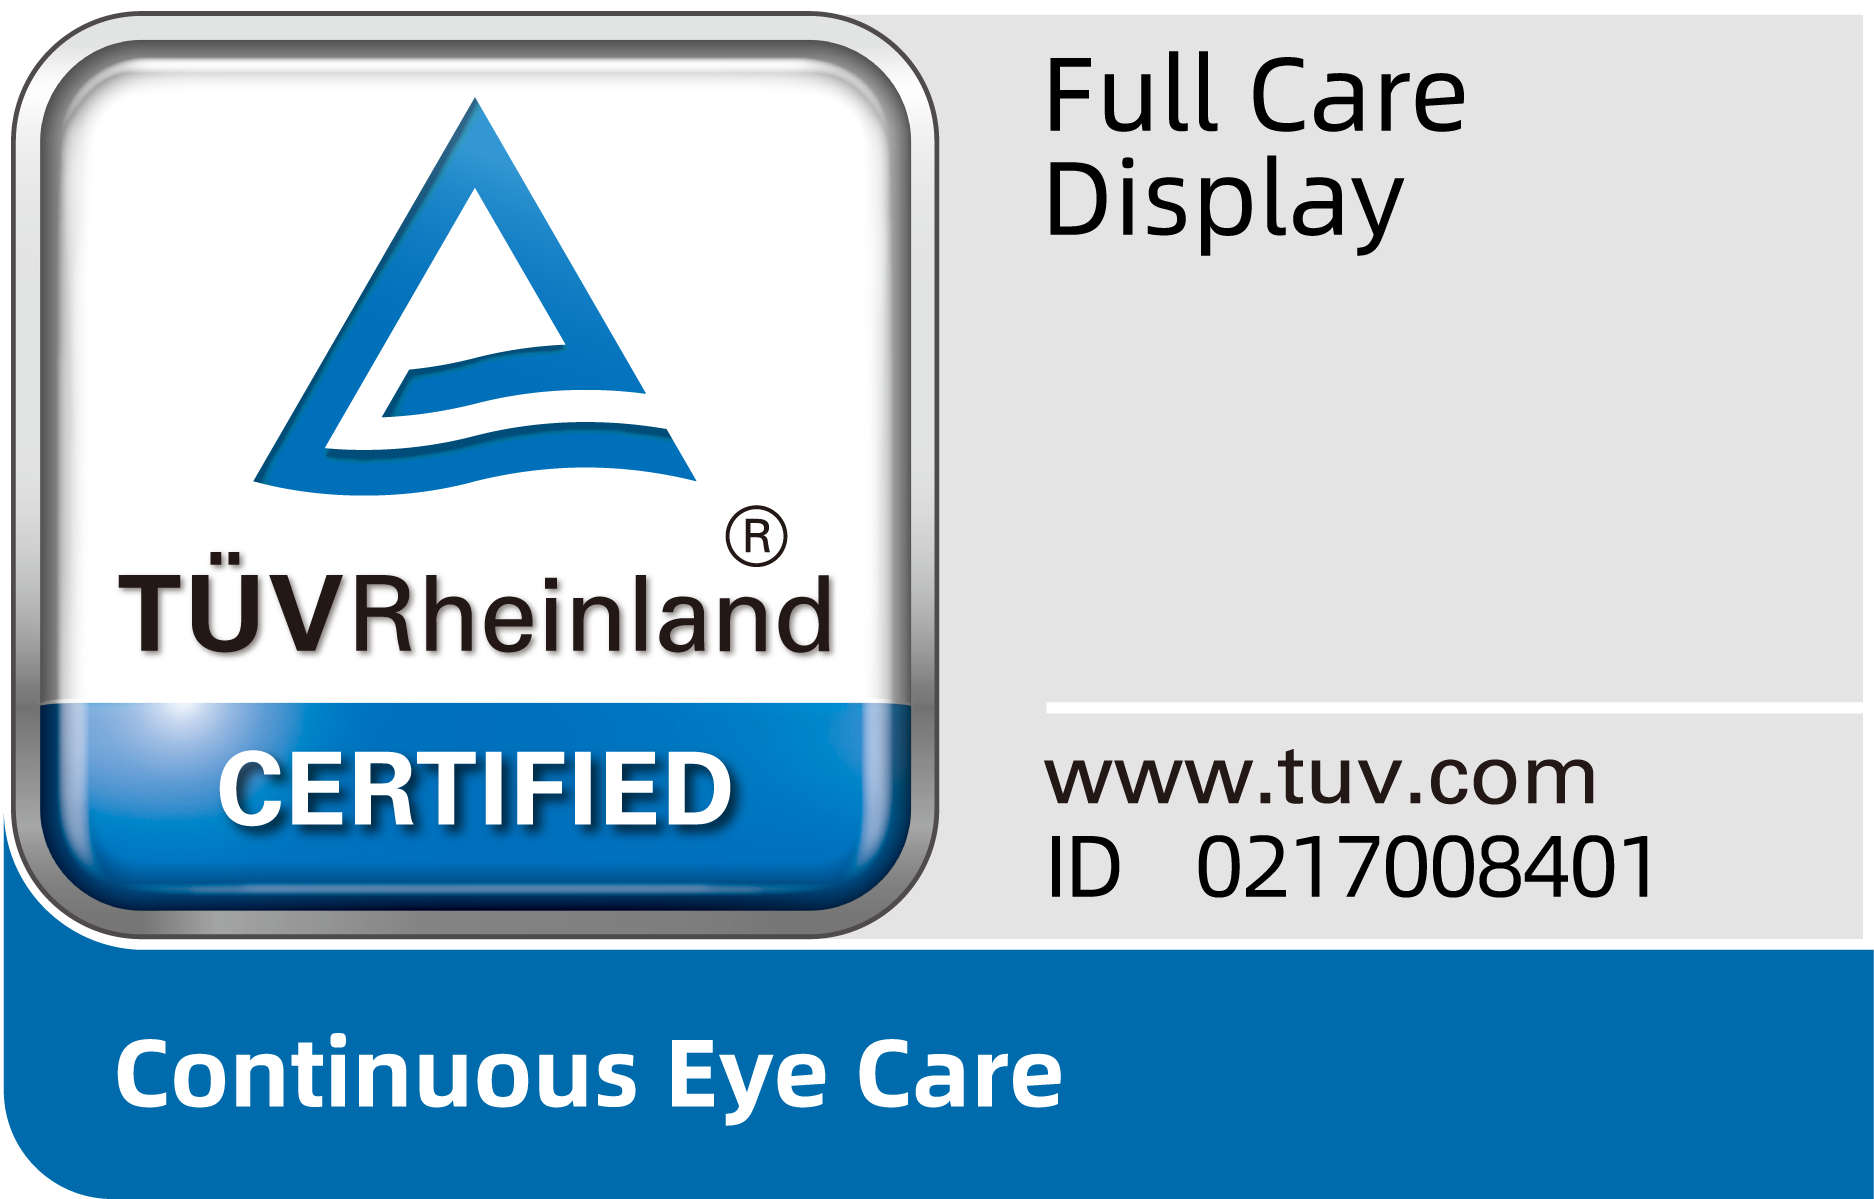 Certifikat „Full Care Display” tvrtke TÜV Rheinland. 1